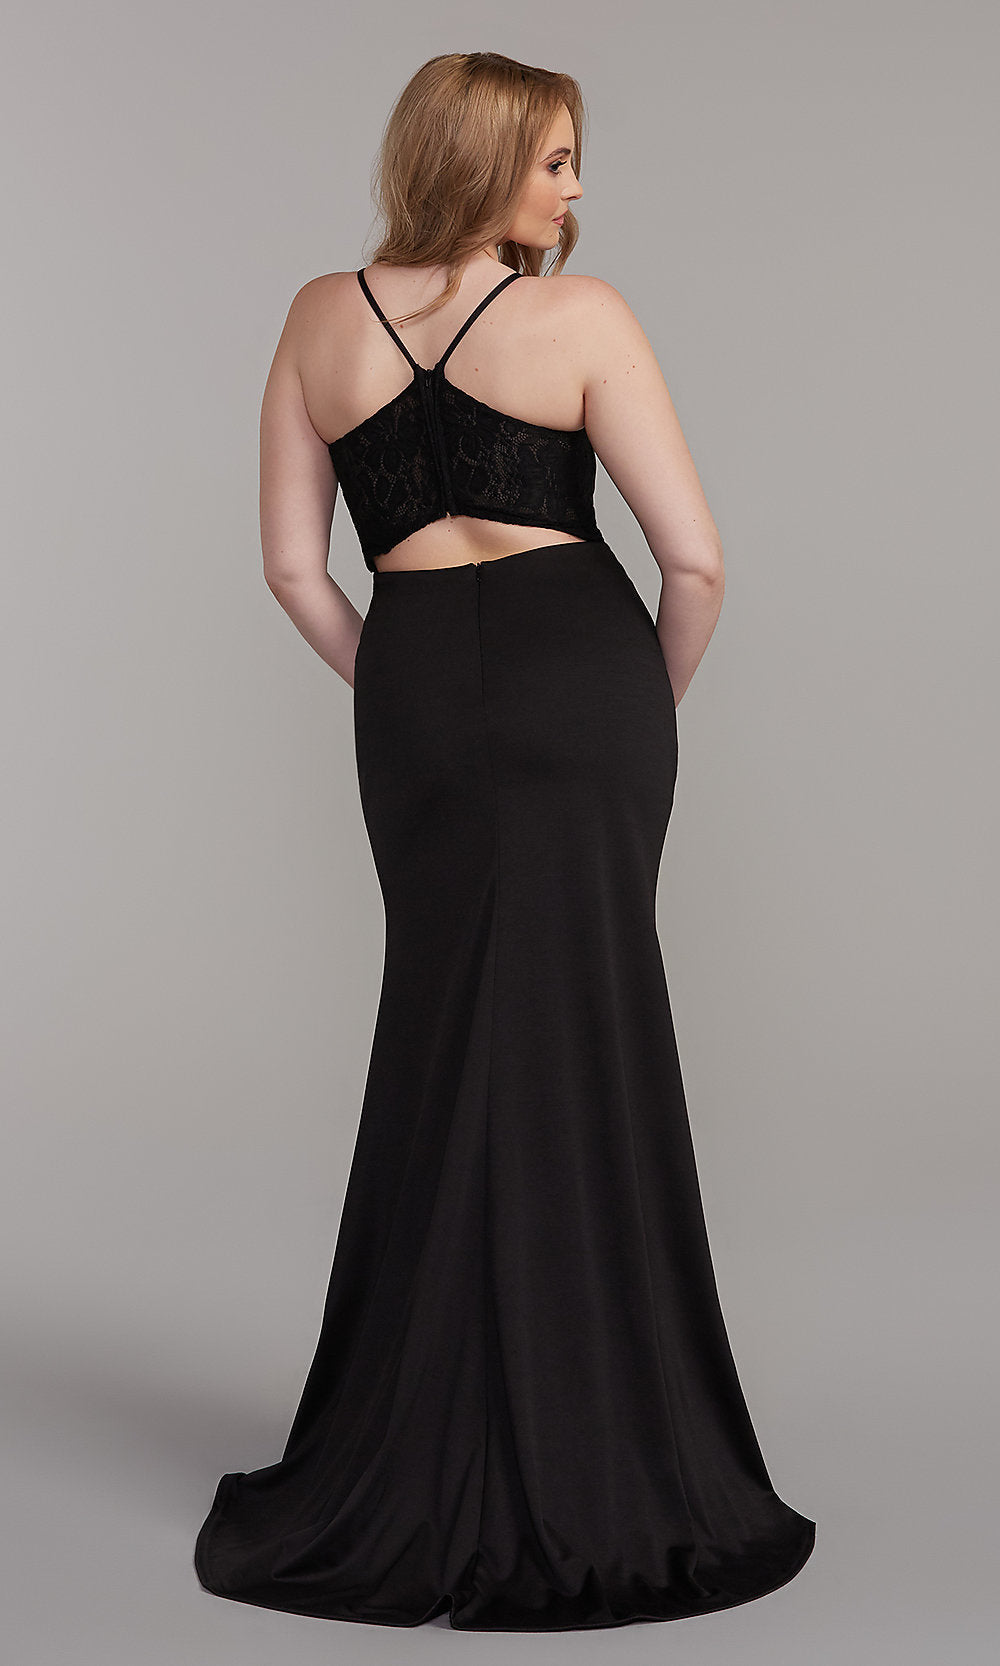 Strappy-Back Long Black Formal Prom Dress - PromGirl